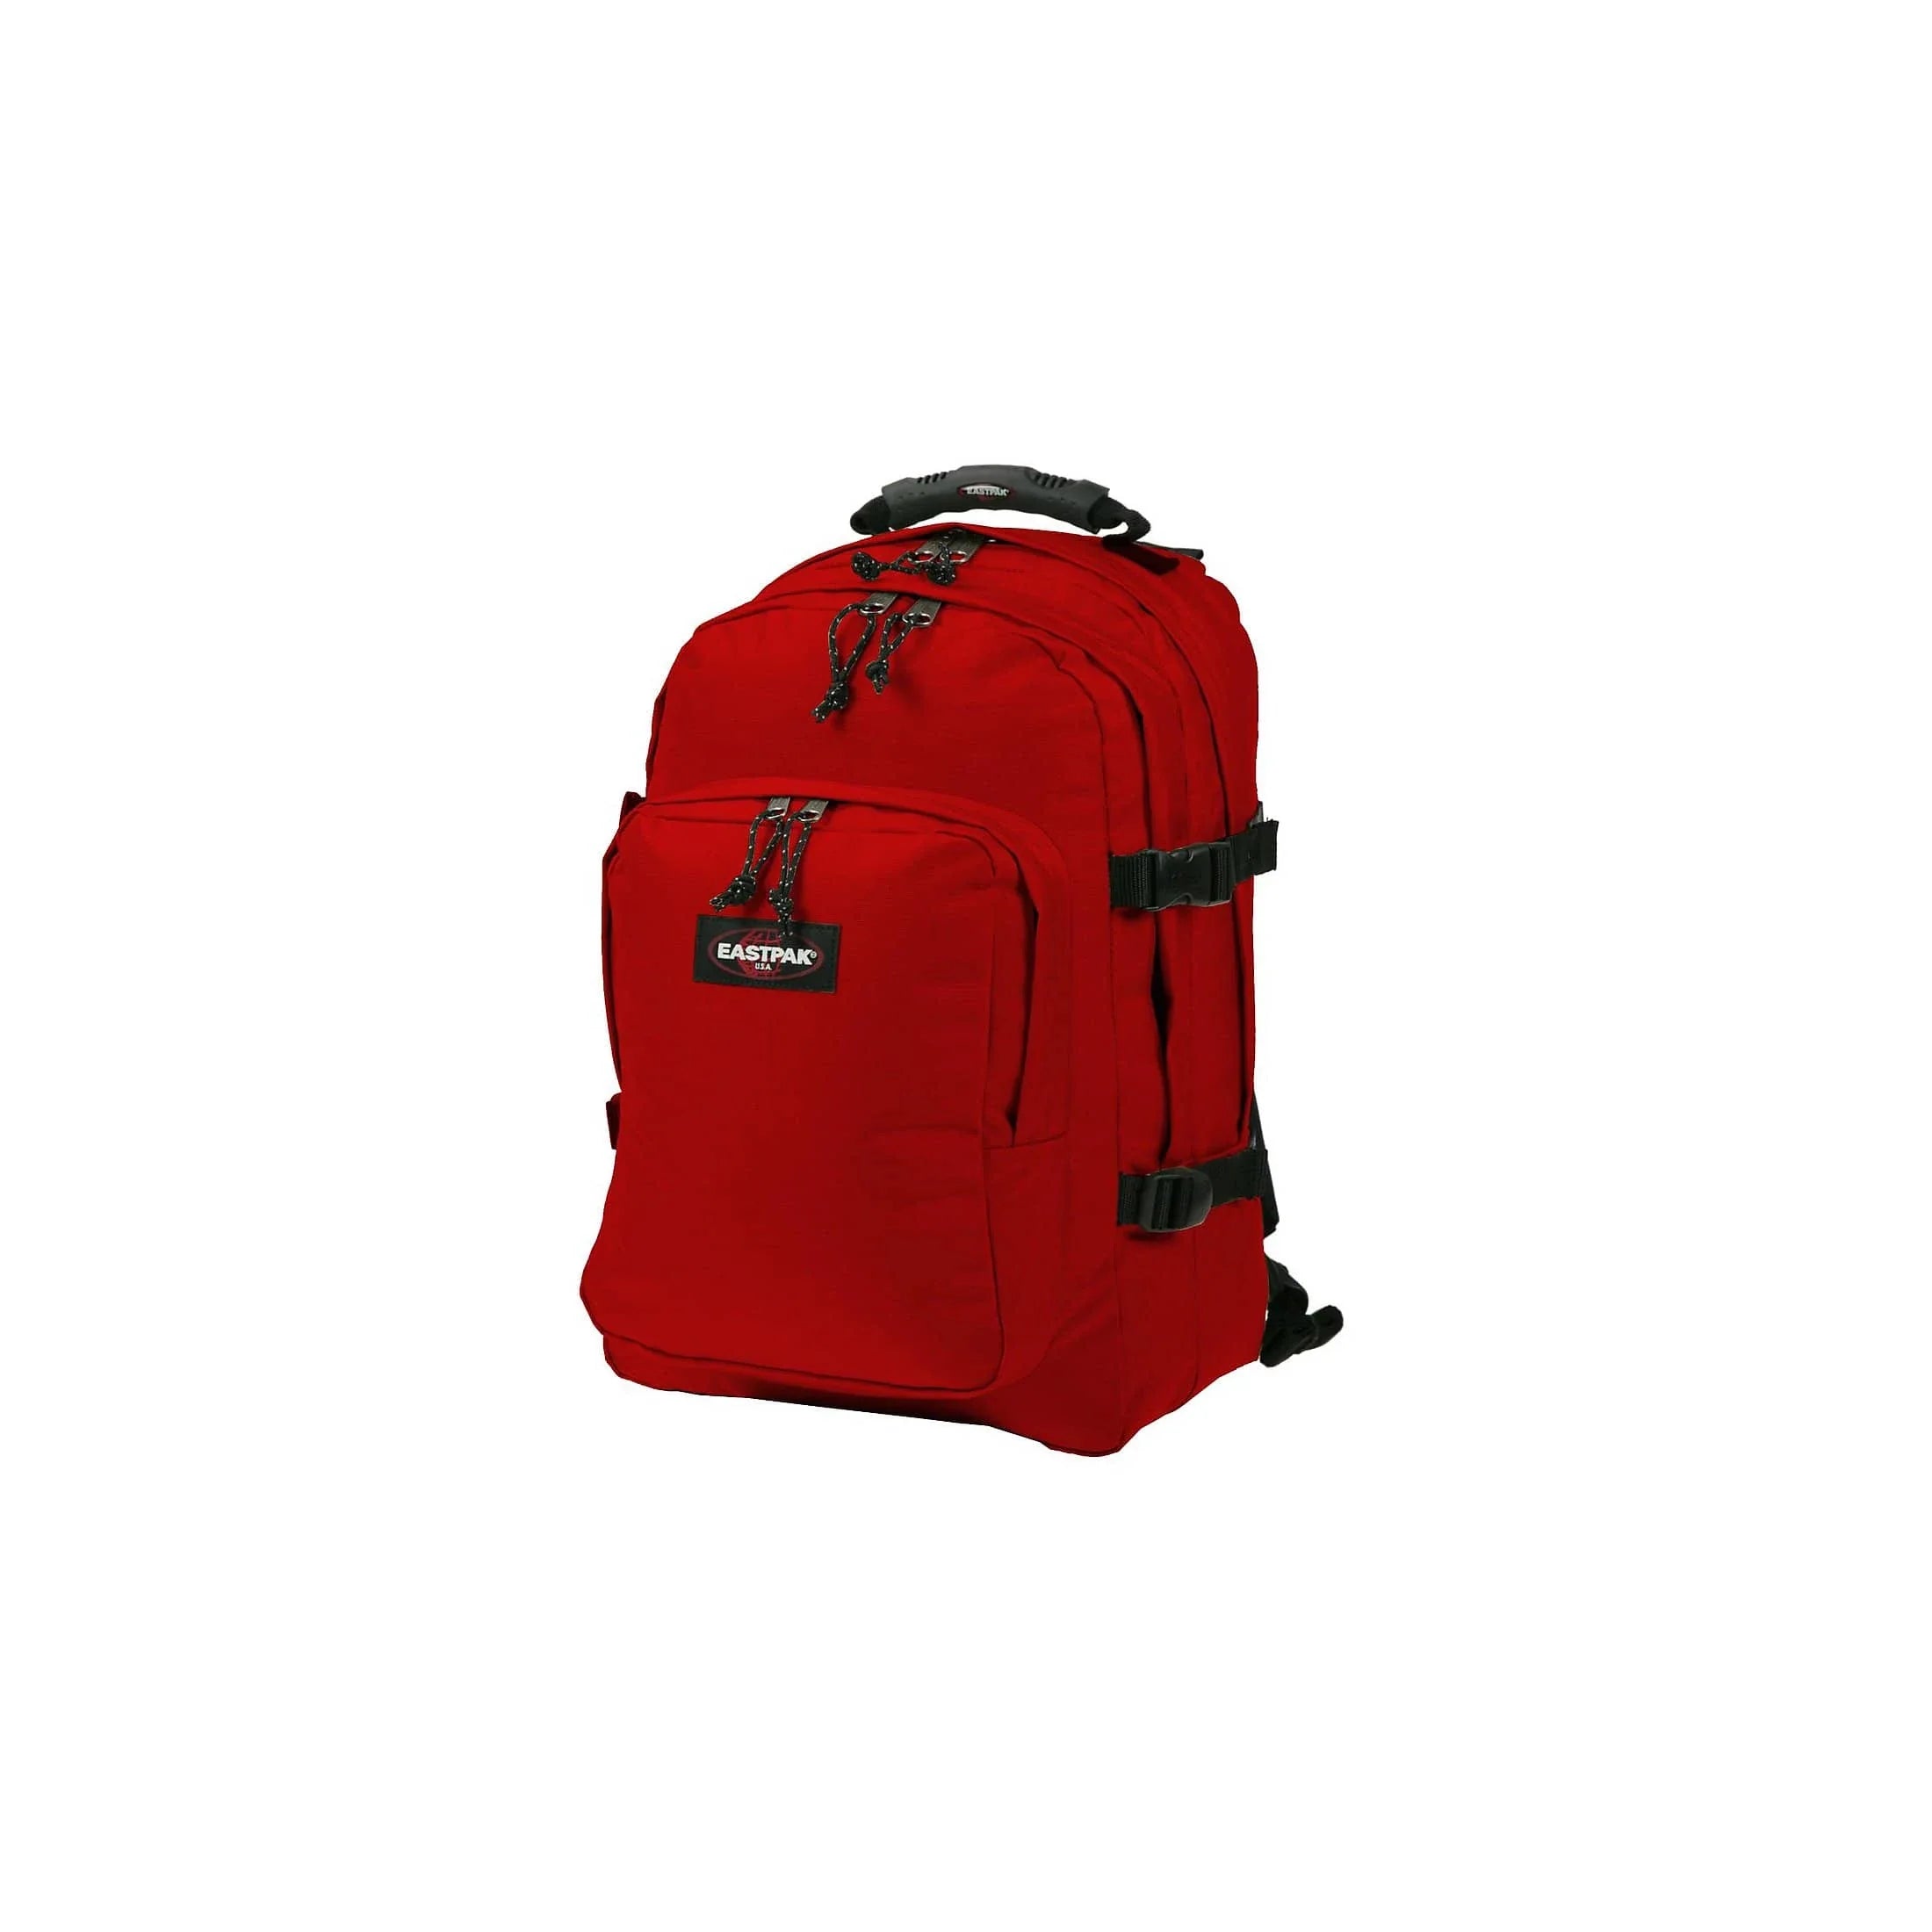 Eastpak Authentic Provider Laptop Backpack 44 cm - black denim